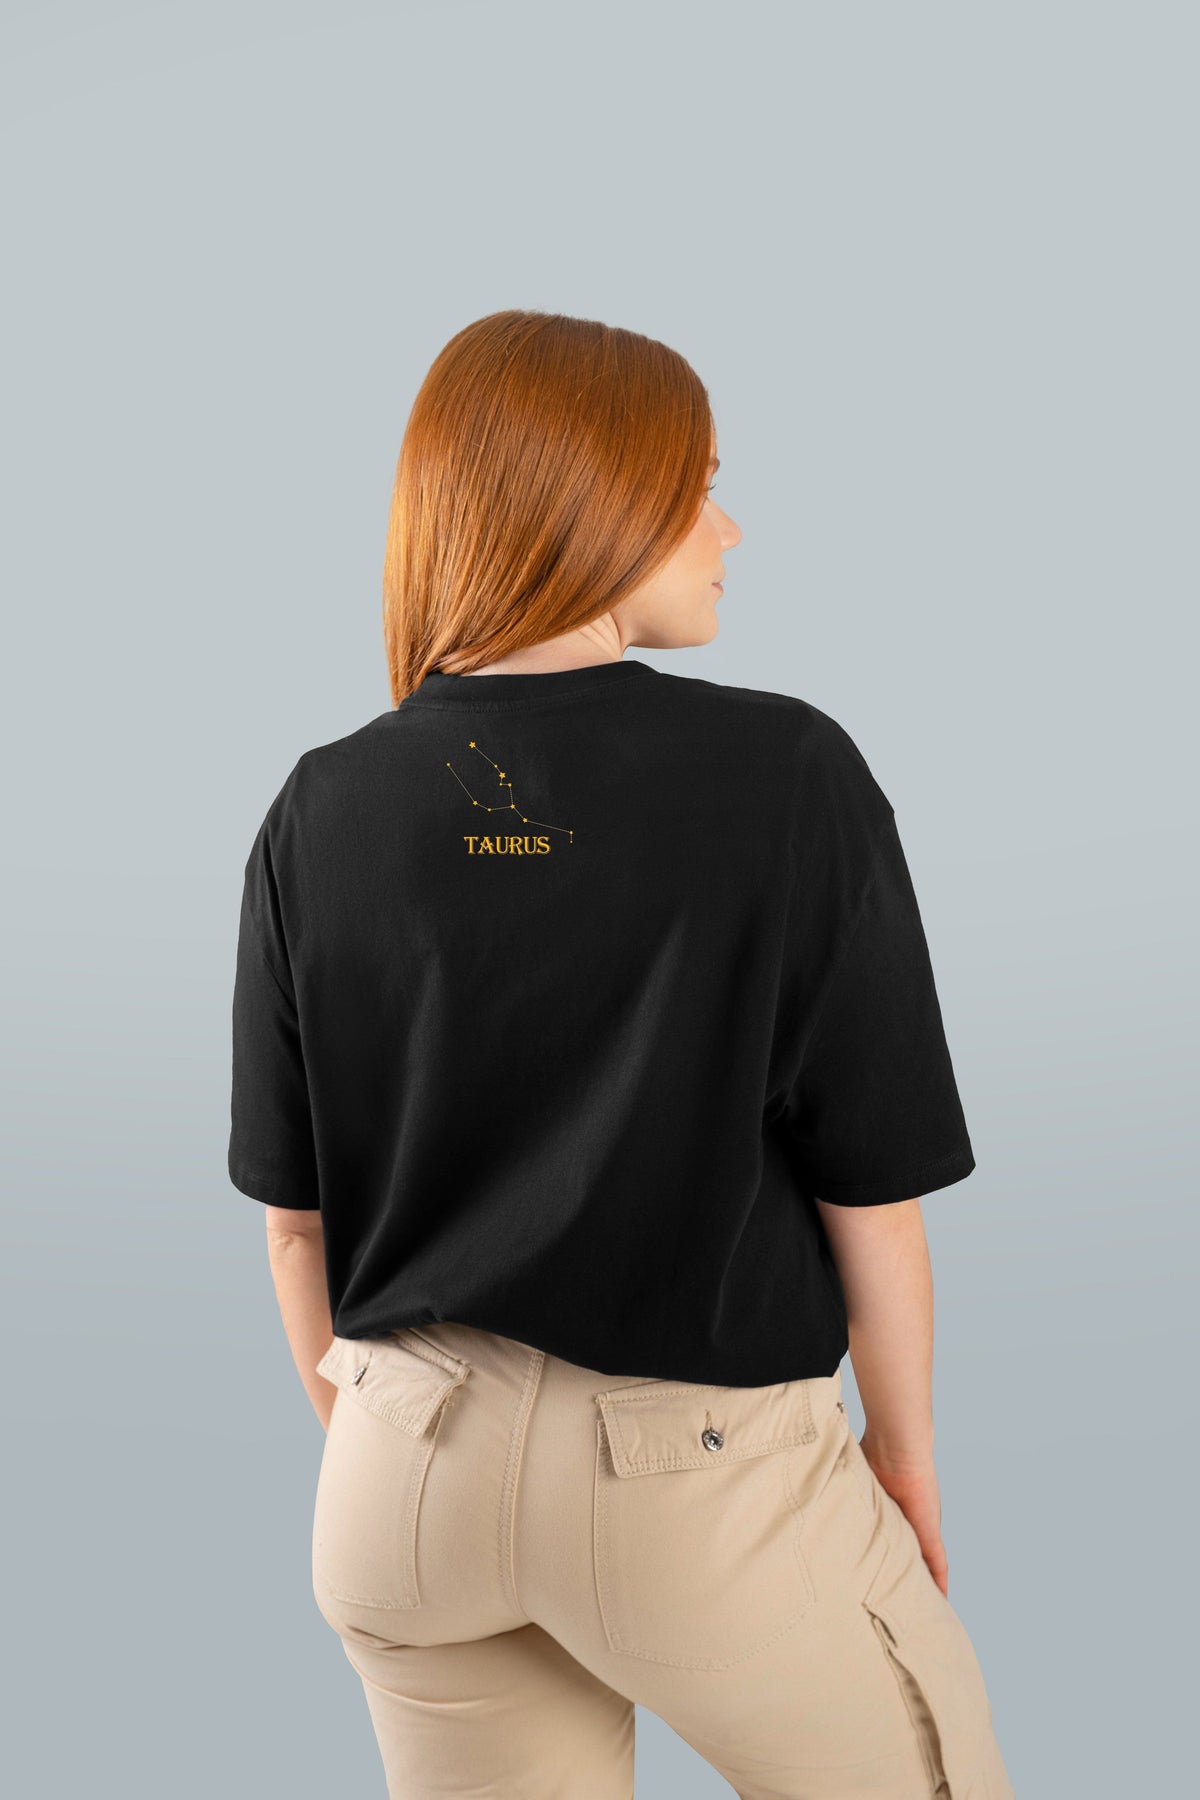 Taurus Zodiac Unisex Oversize T-Shirt